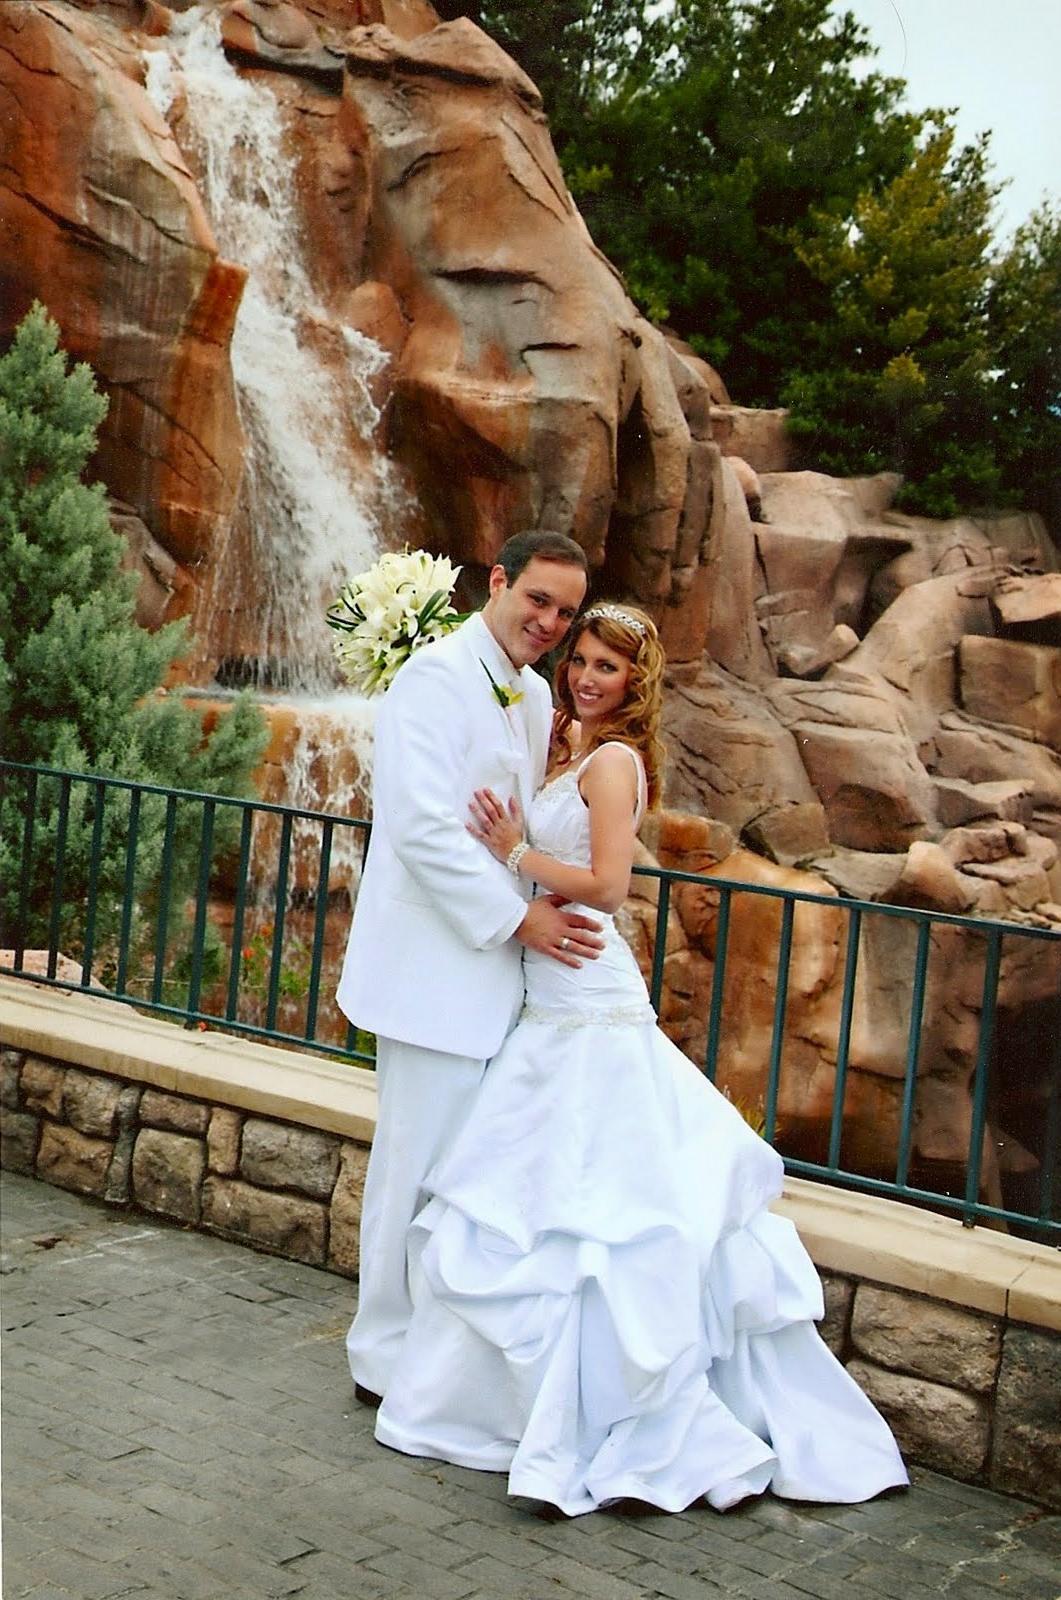 The Disney Wedding Blog: